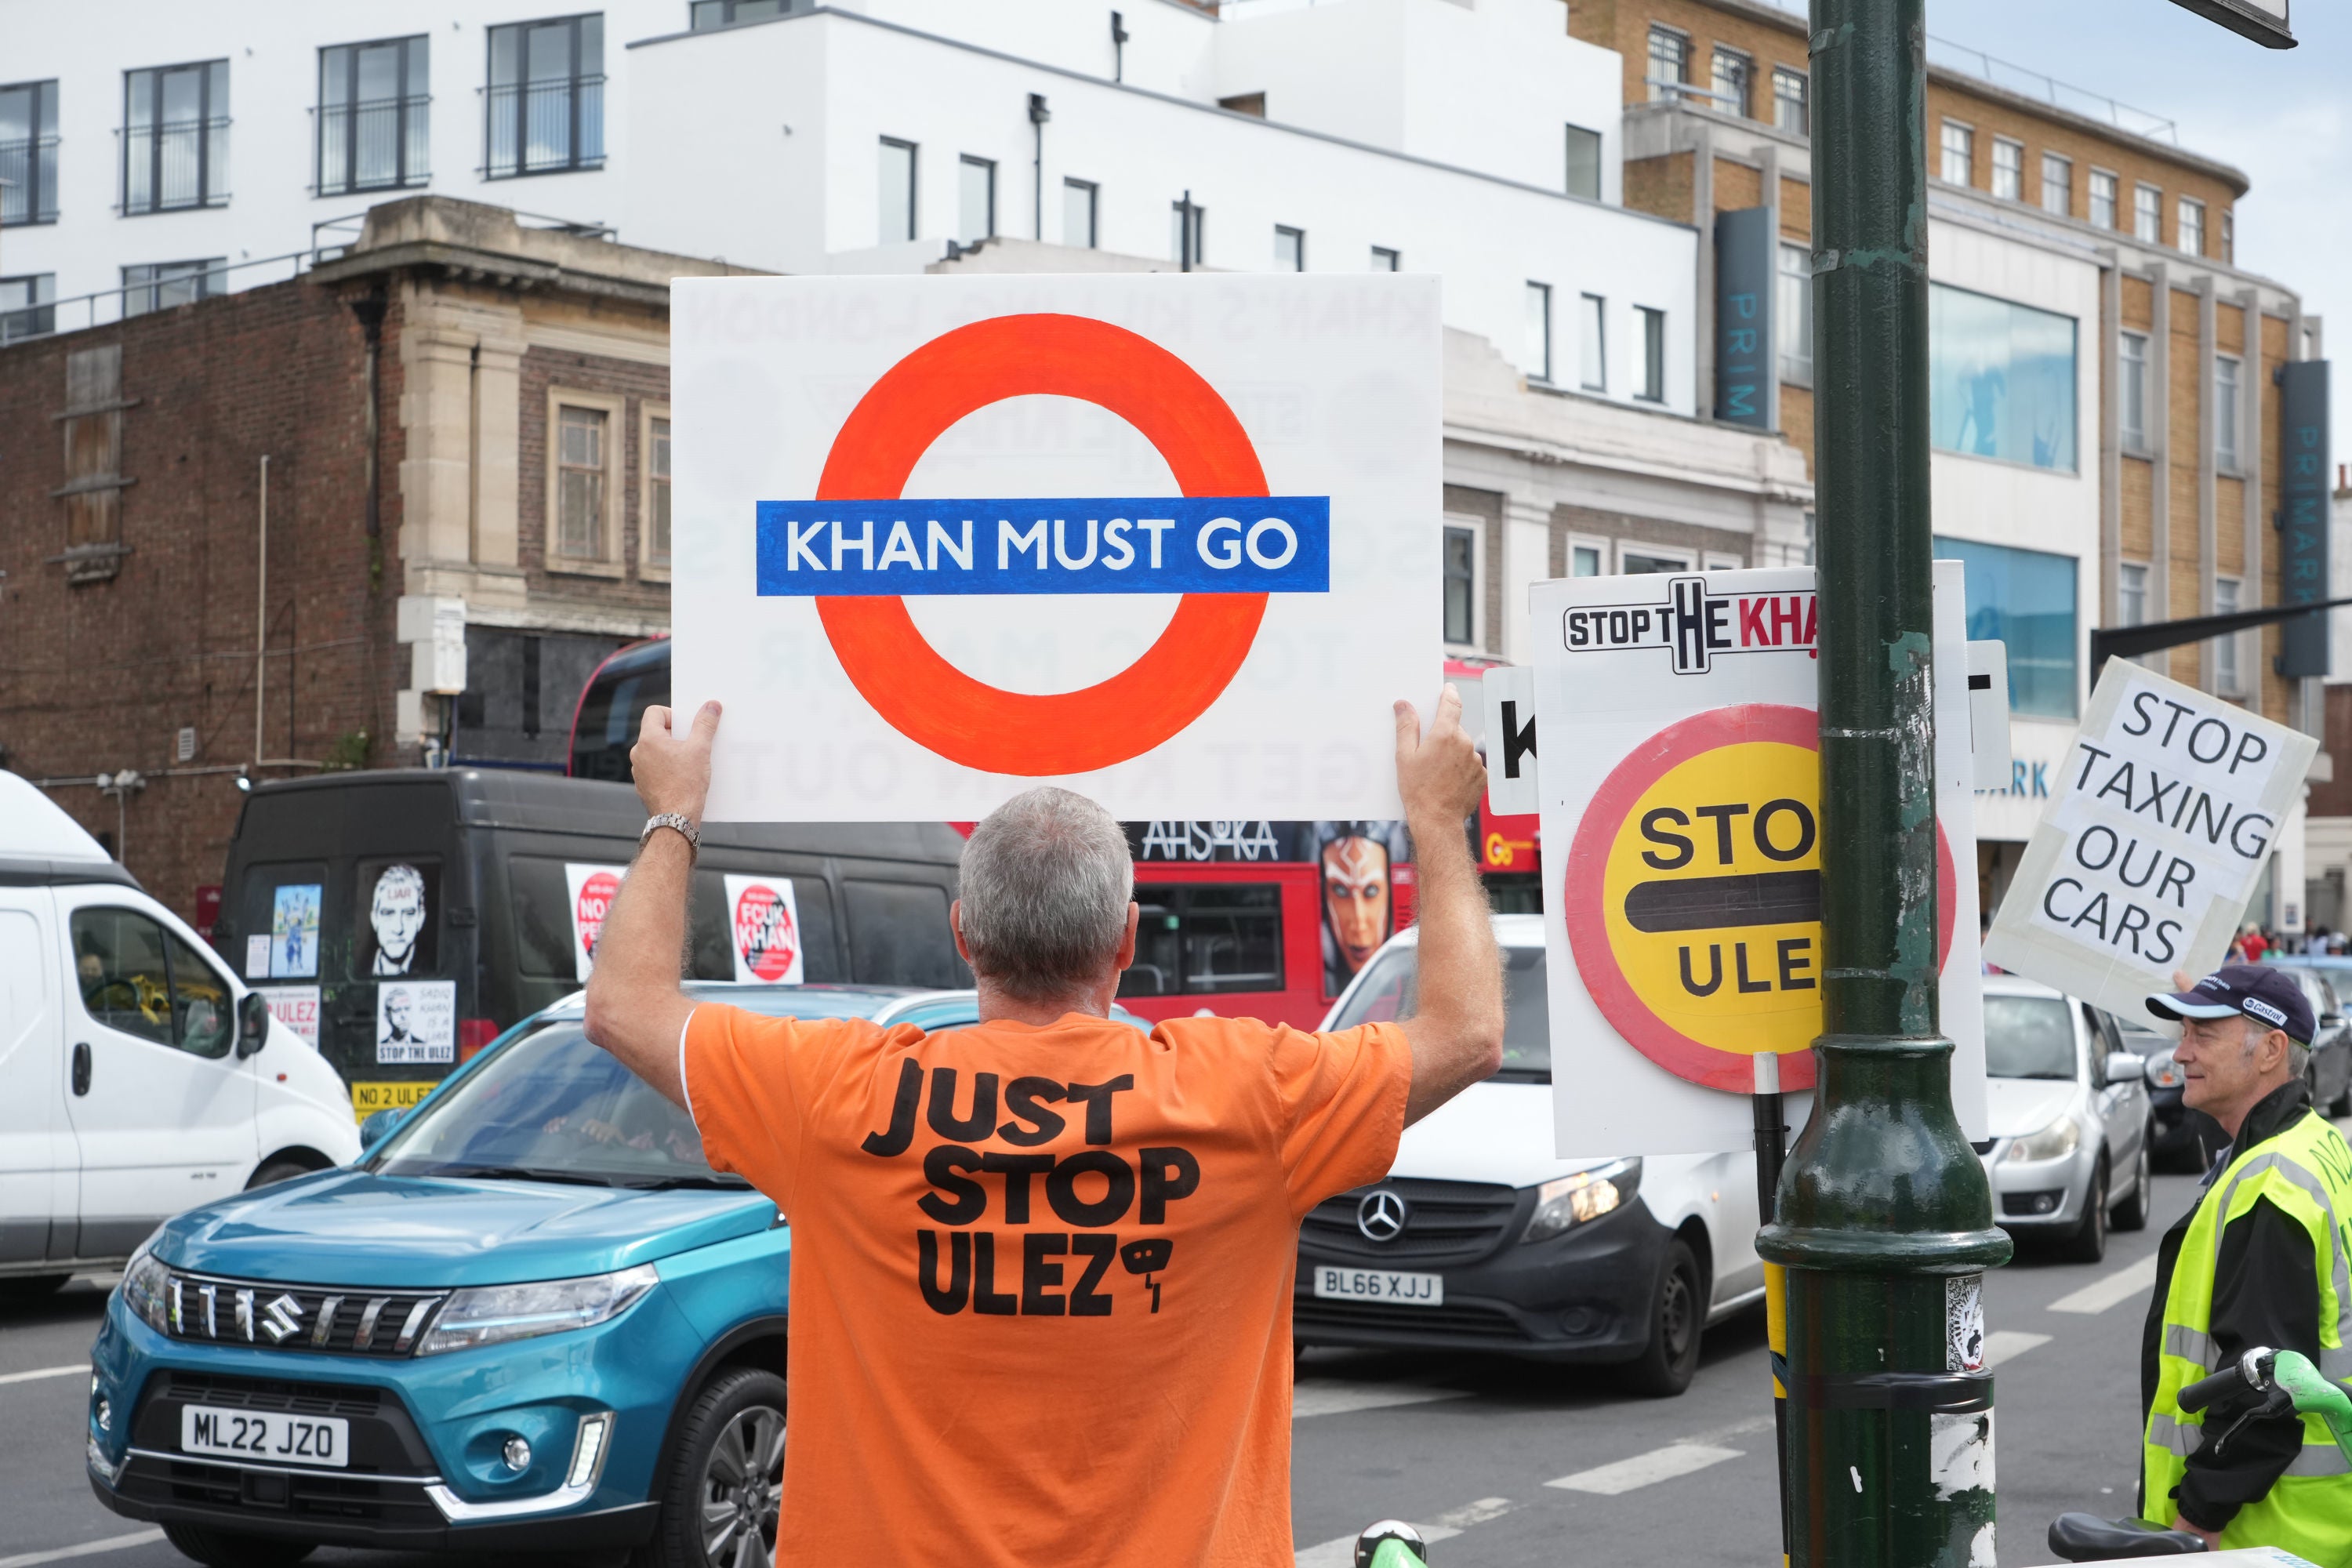 London mayor Sadiq Khan has become a target for the anti-Ulez movement